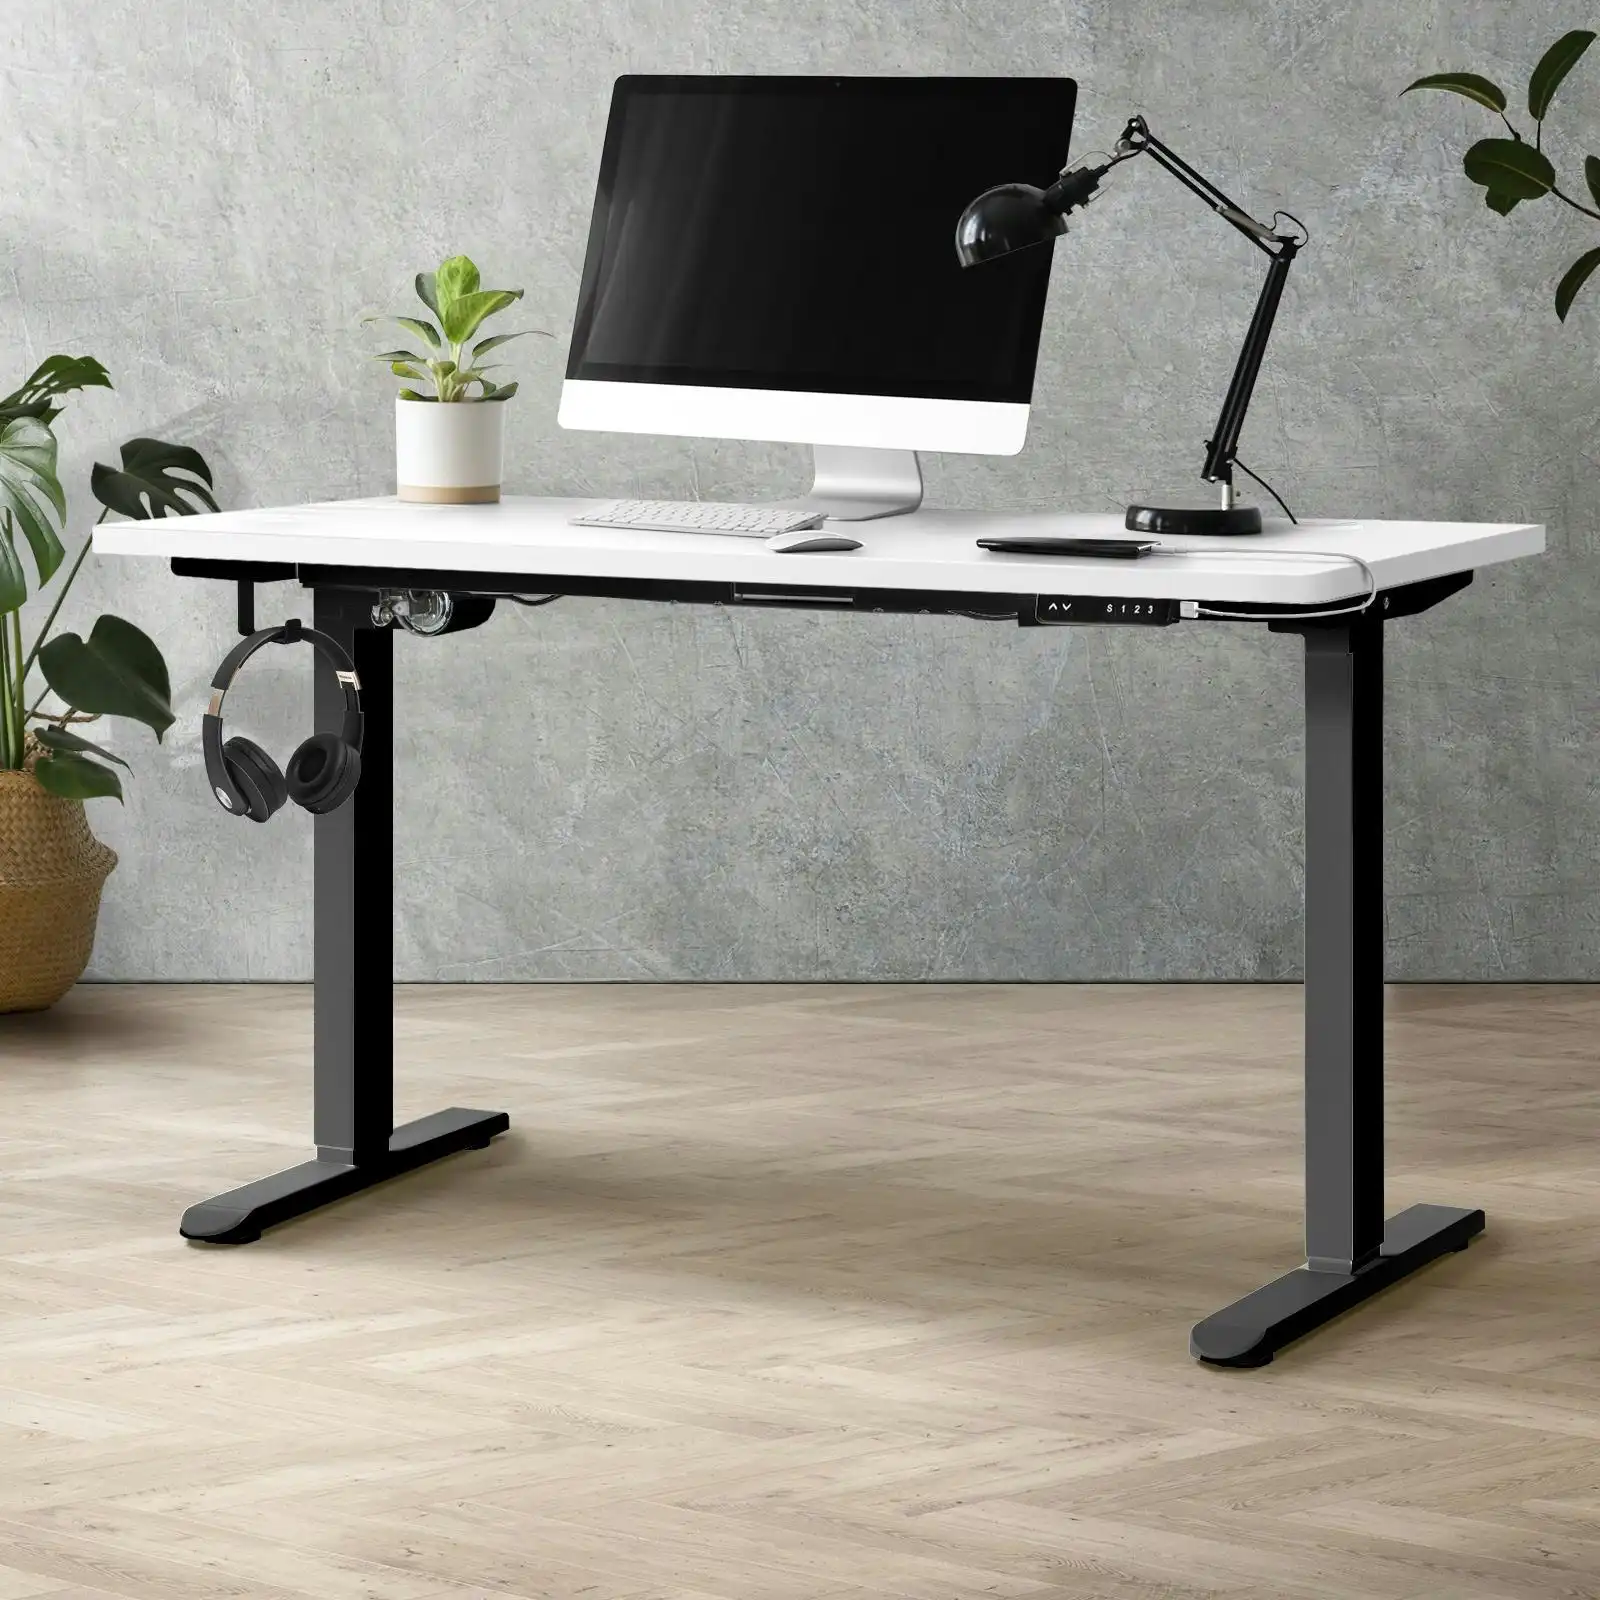 Oikiture 140CM Electric Standing Desk Single Motor Black Frame White Desktop With USB&Type C Port